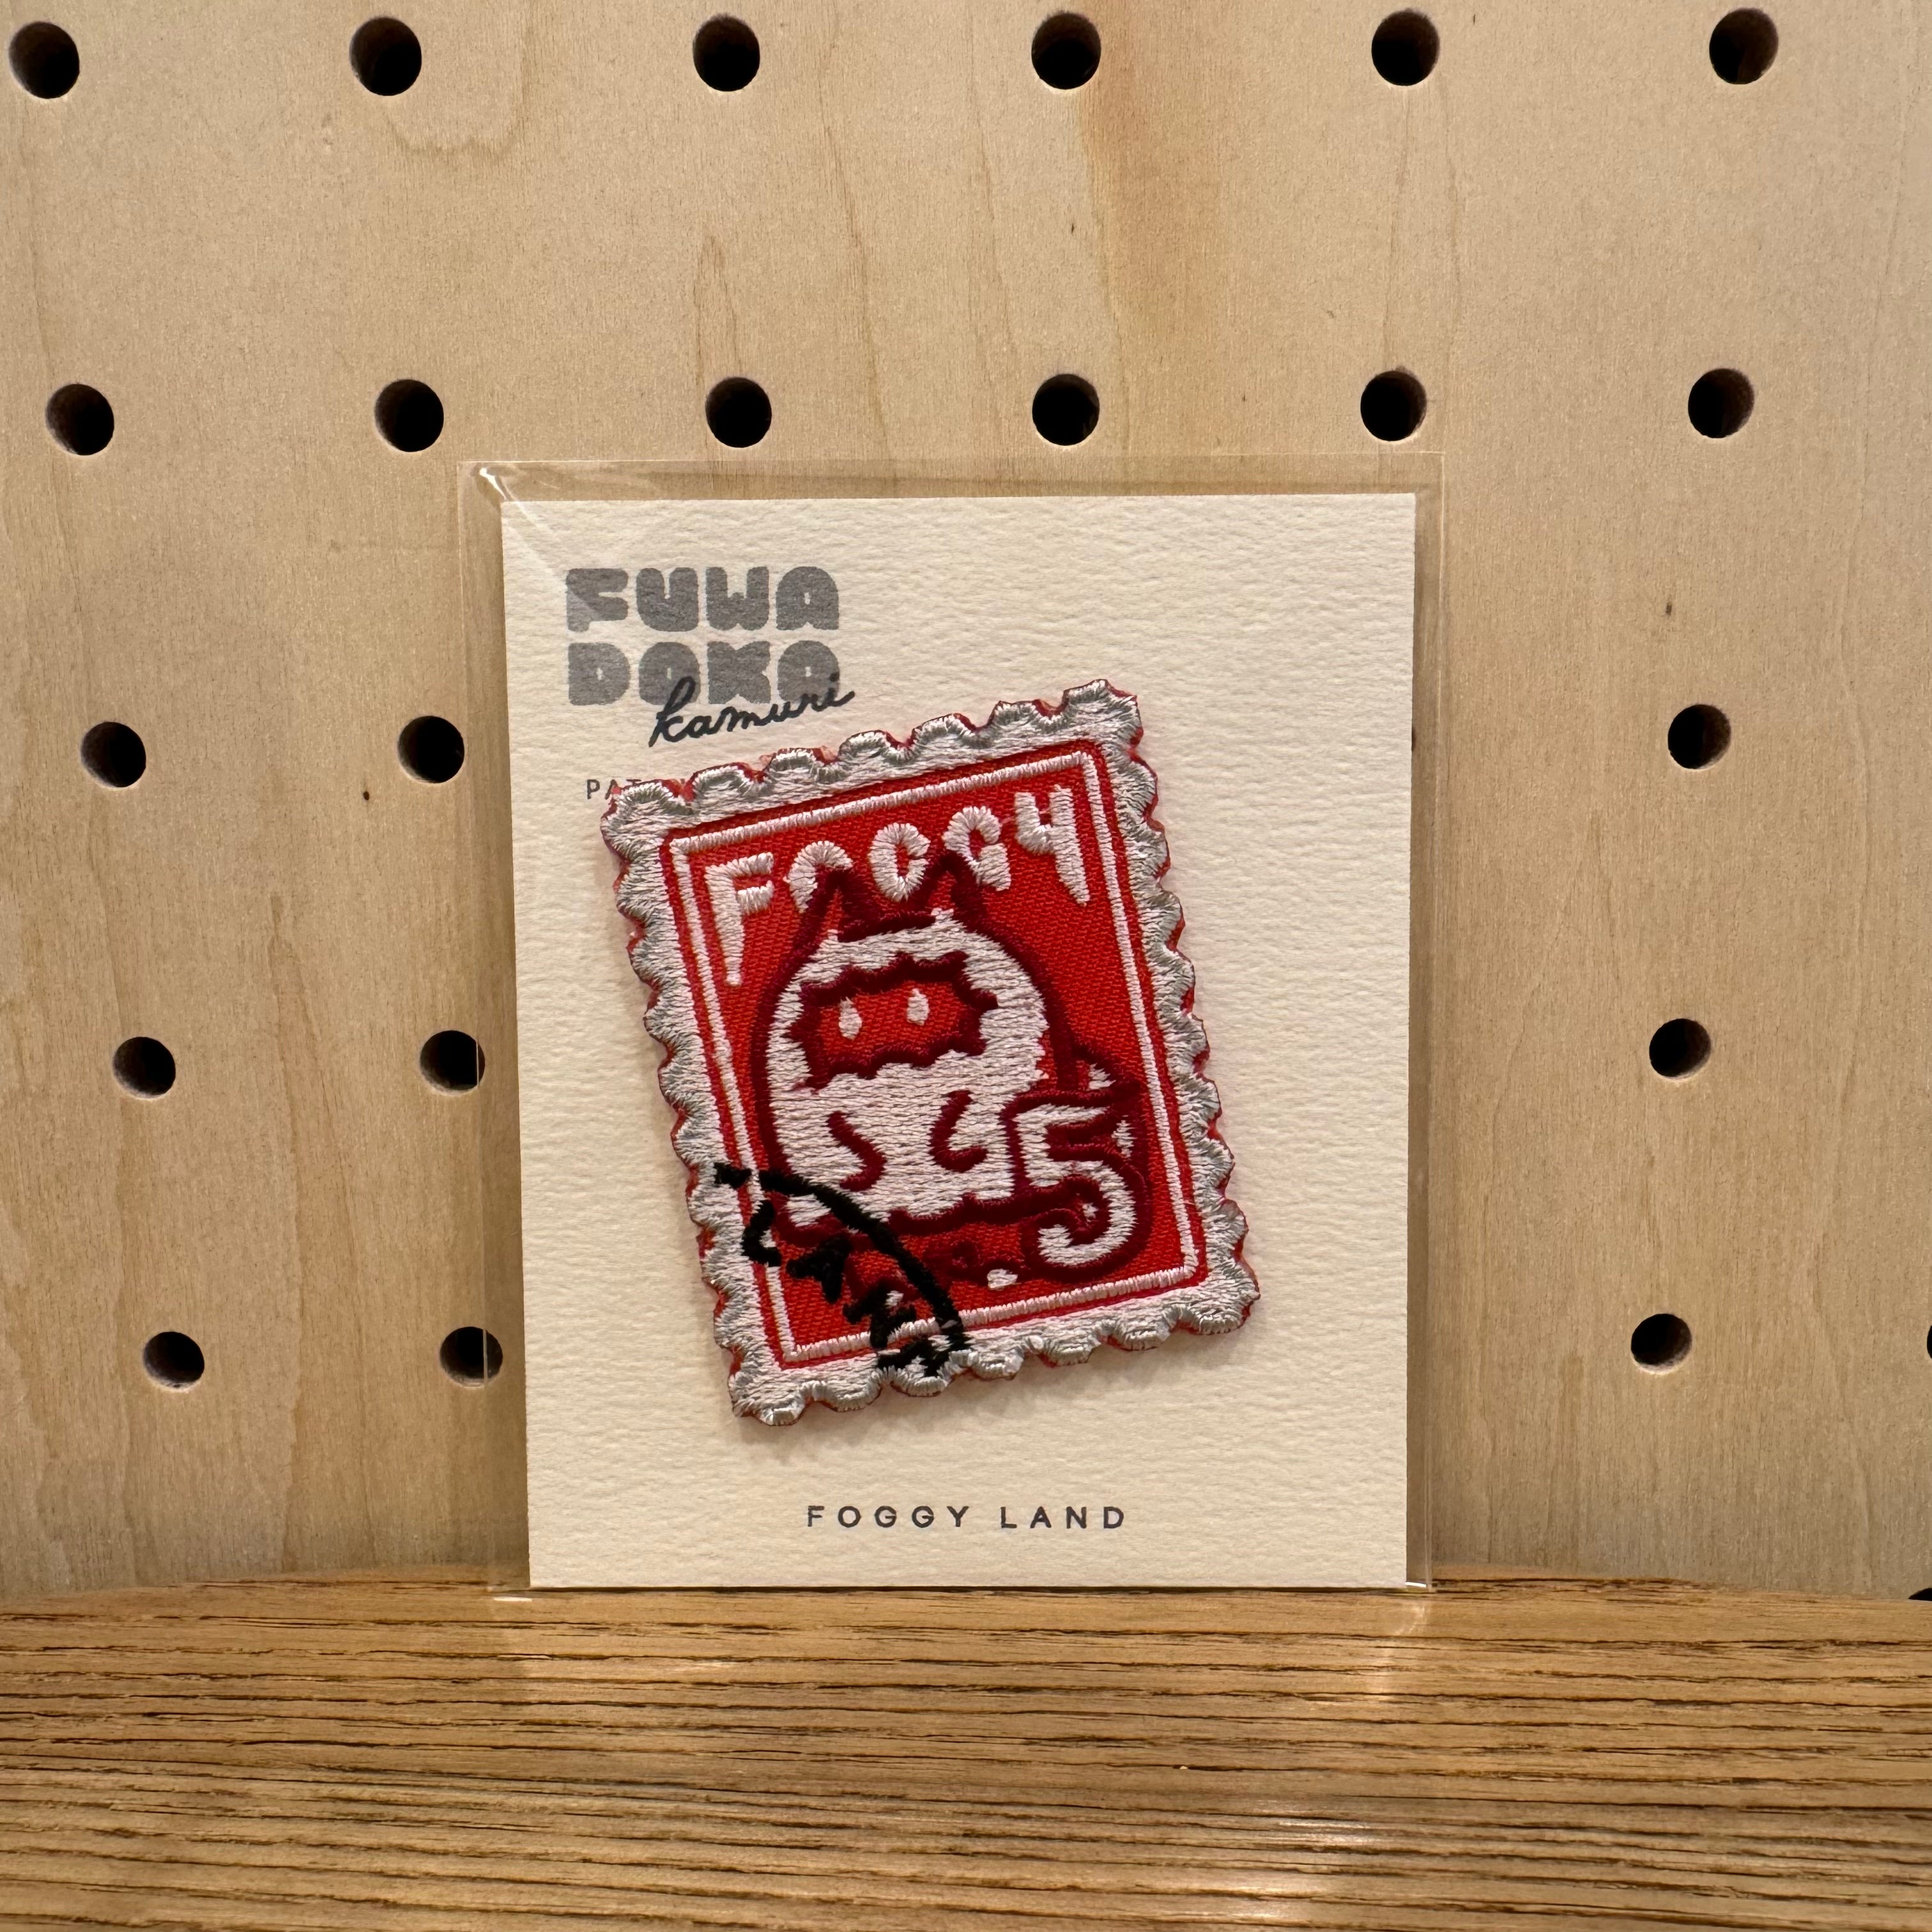 Fuwadoko Stamp Patch Sticker